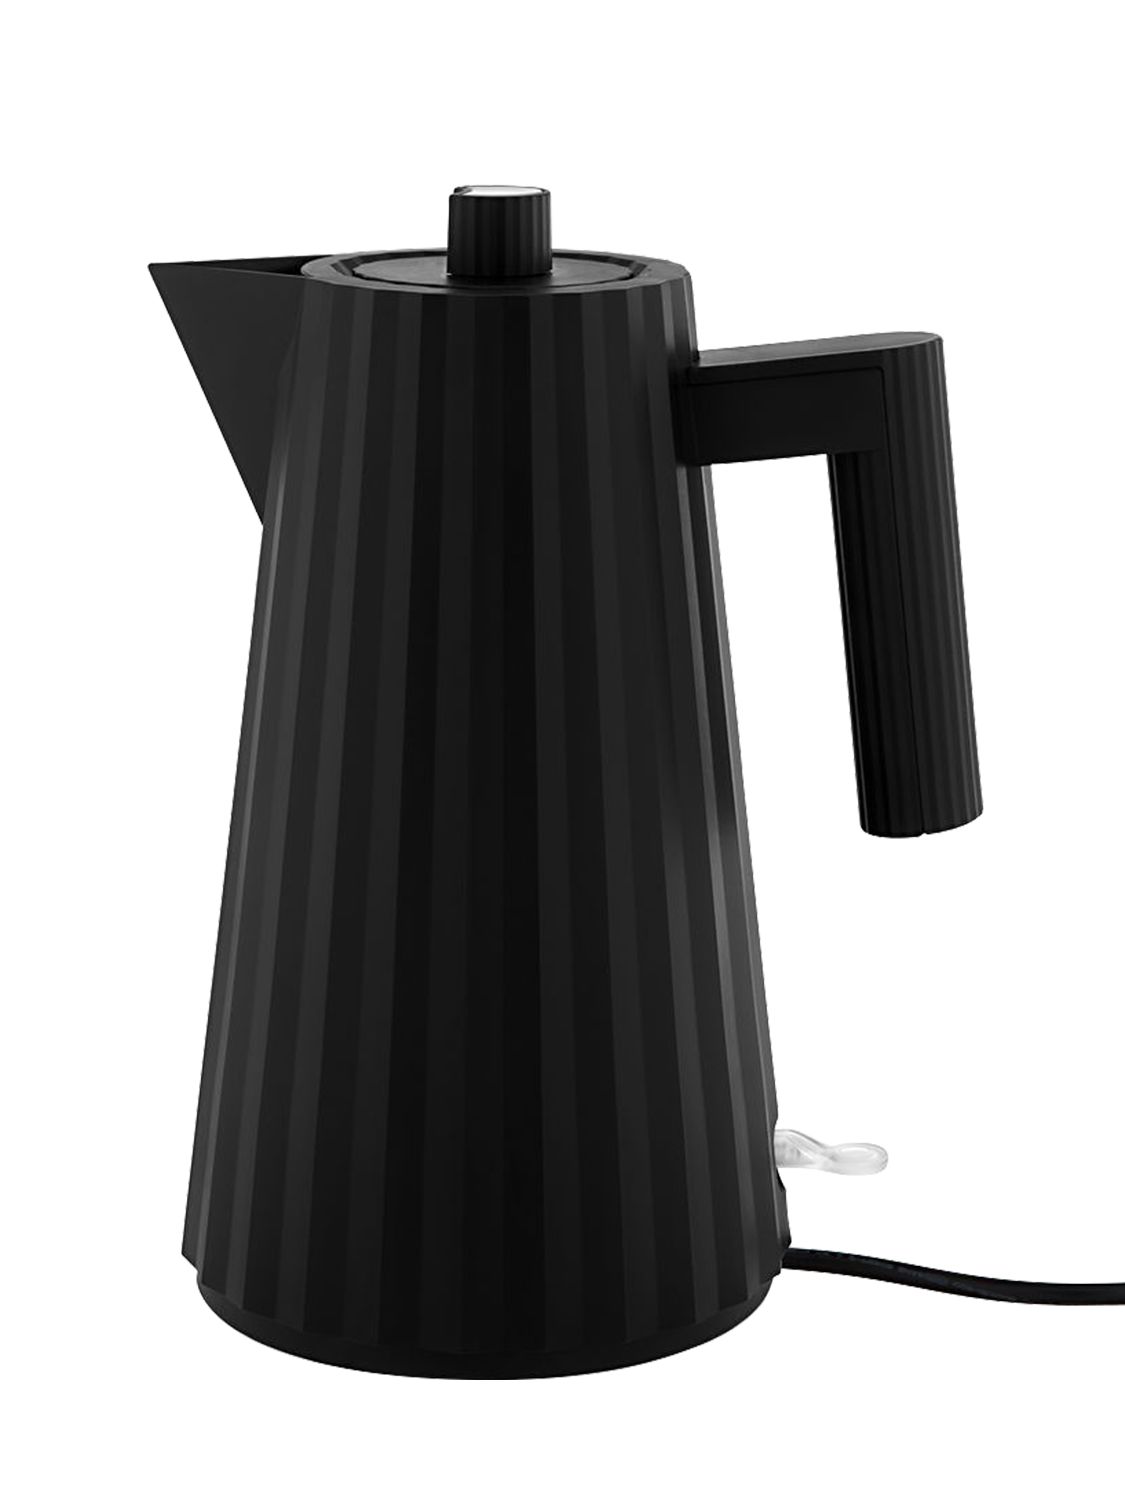 Alessi Plissé Electric Tea Kettle In Black